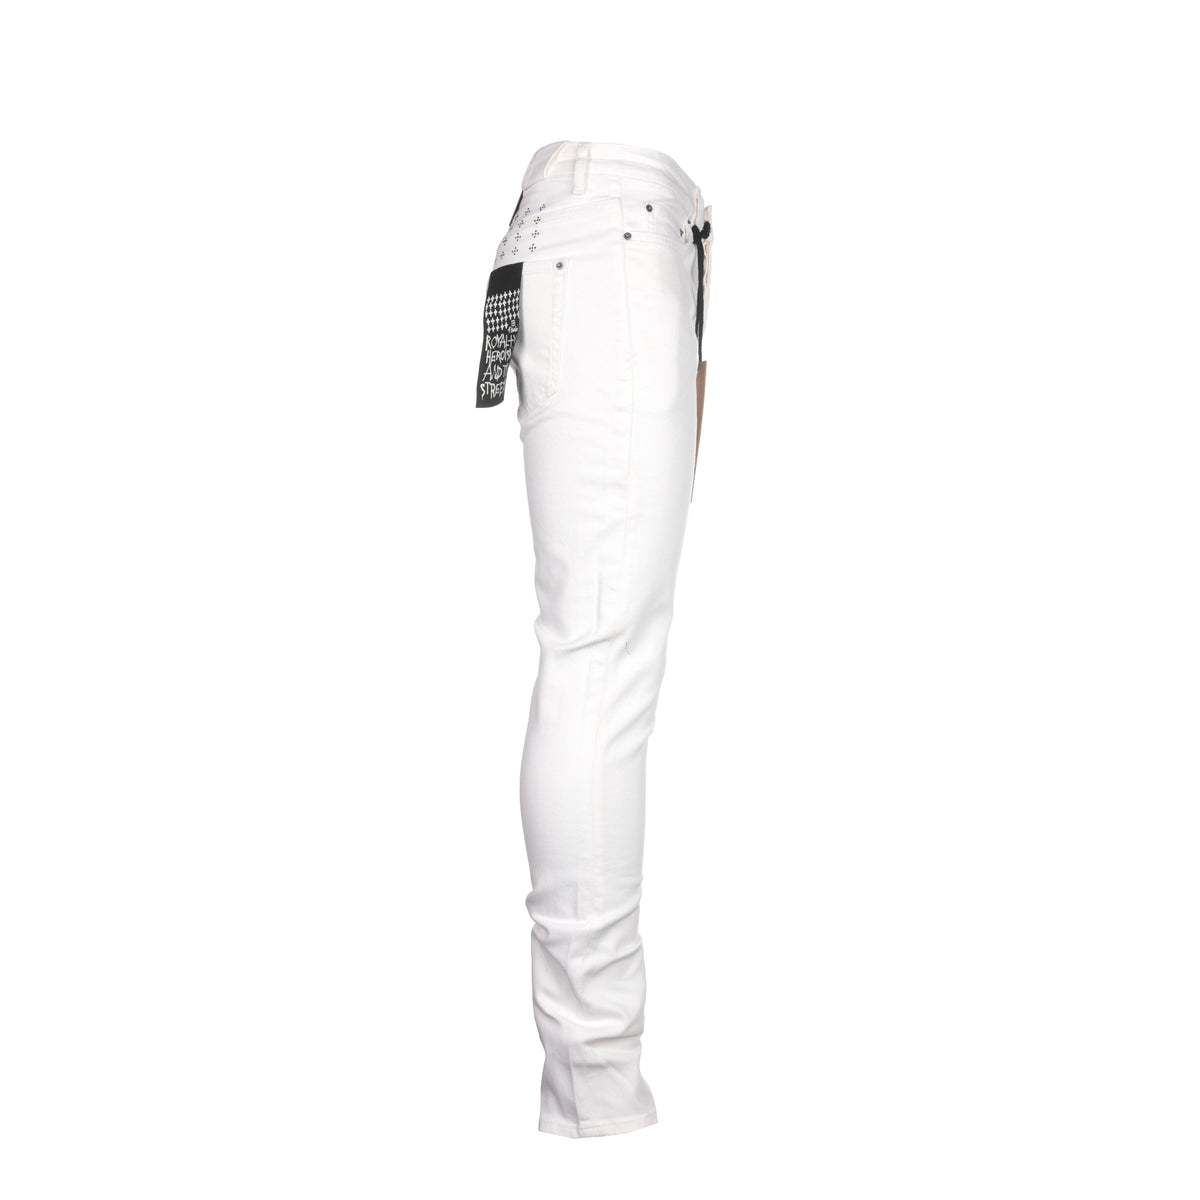 Ksubi Chitch Polar Krystal Men's White Jeans - SIZE Boutique